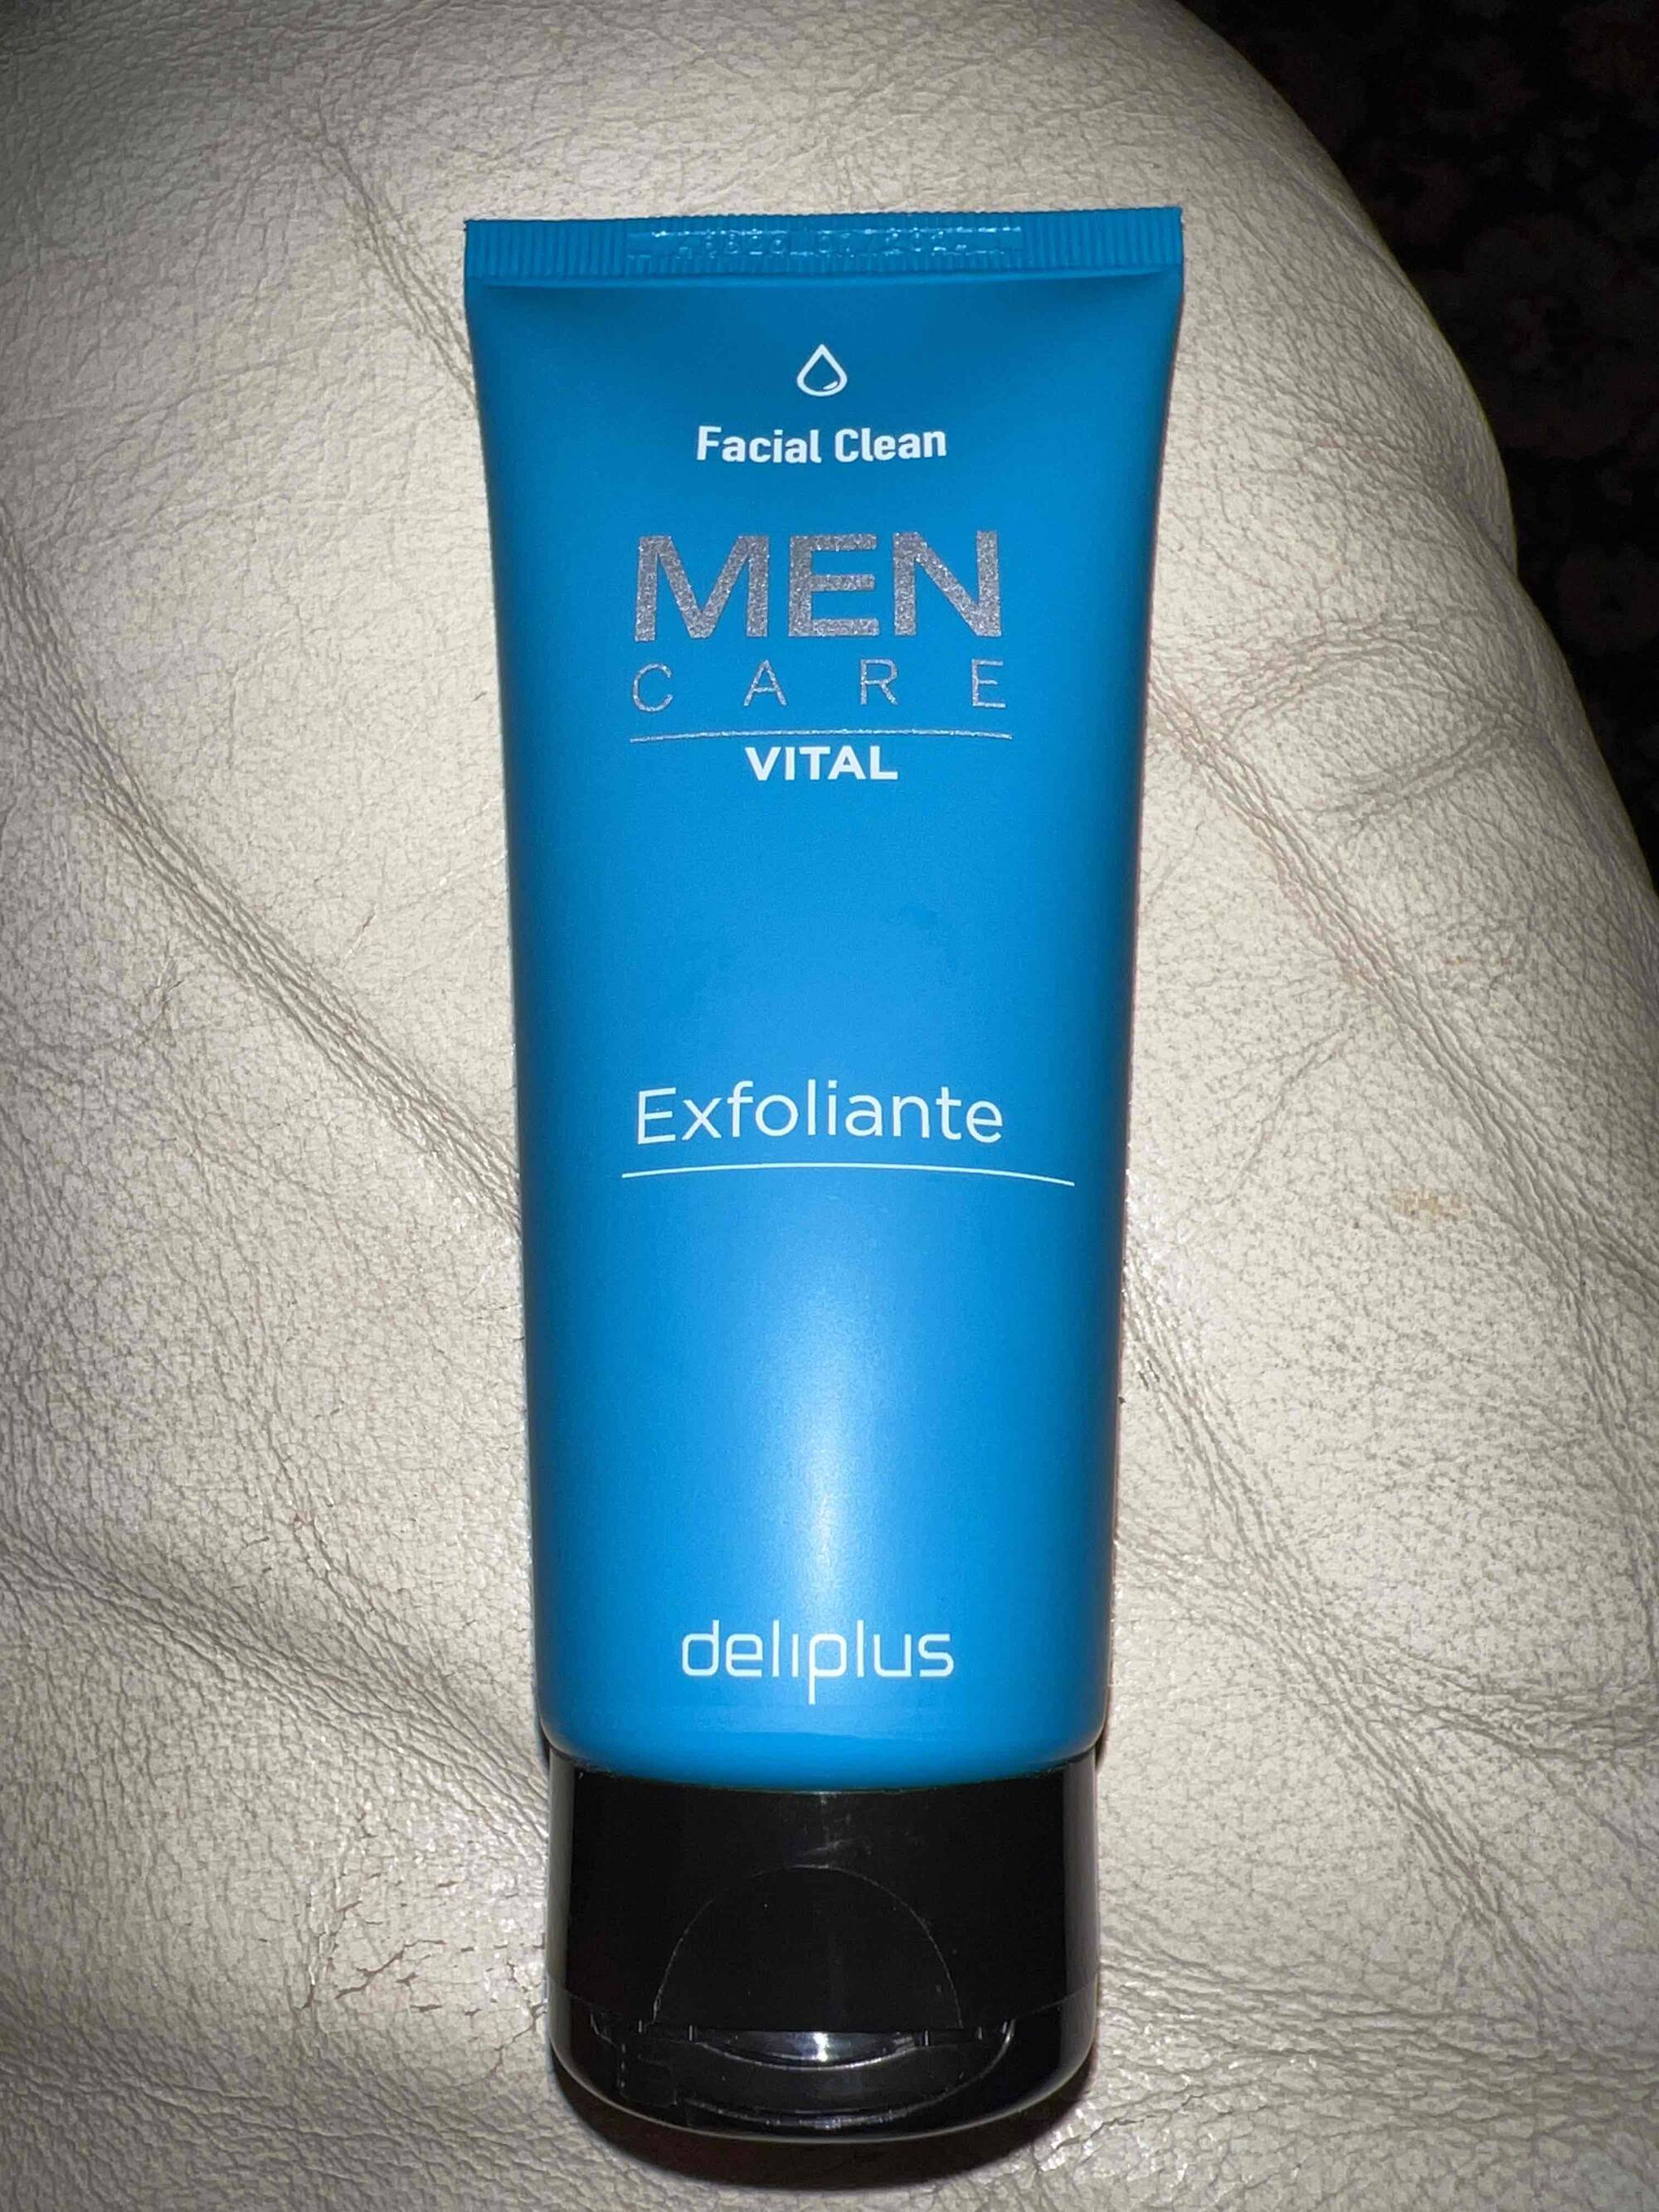 DELIPLUS - Men care vital - Facial clean exfoliante